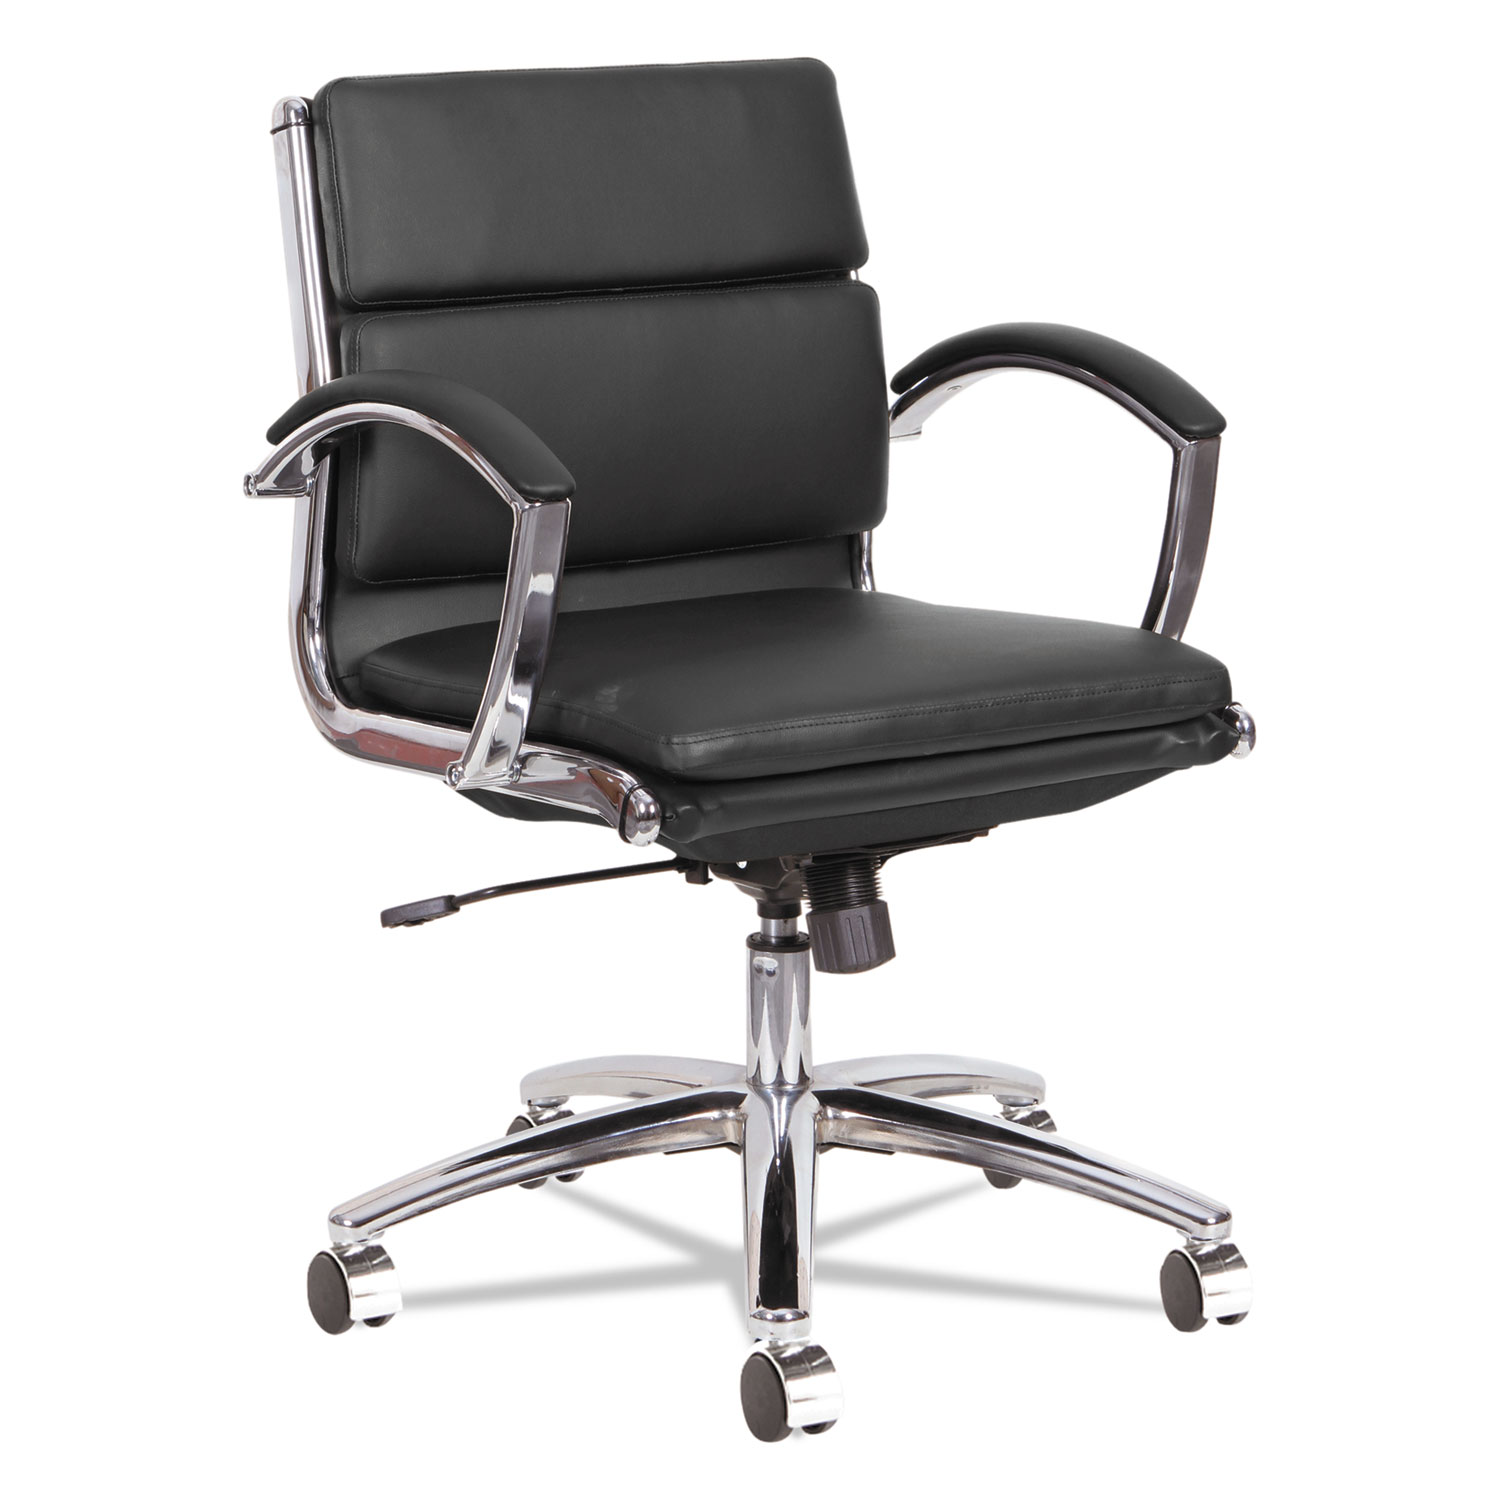  Alera ALENR4719 Alera Neratoli Low-Back Slim Profile Chair, Supports up to 275 lbs., Black Seat/Black Back, Chrome Base (ALENR4719) 